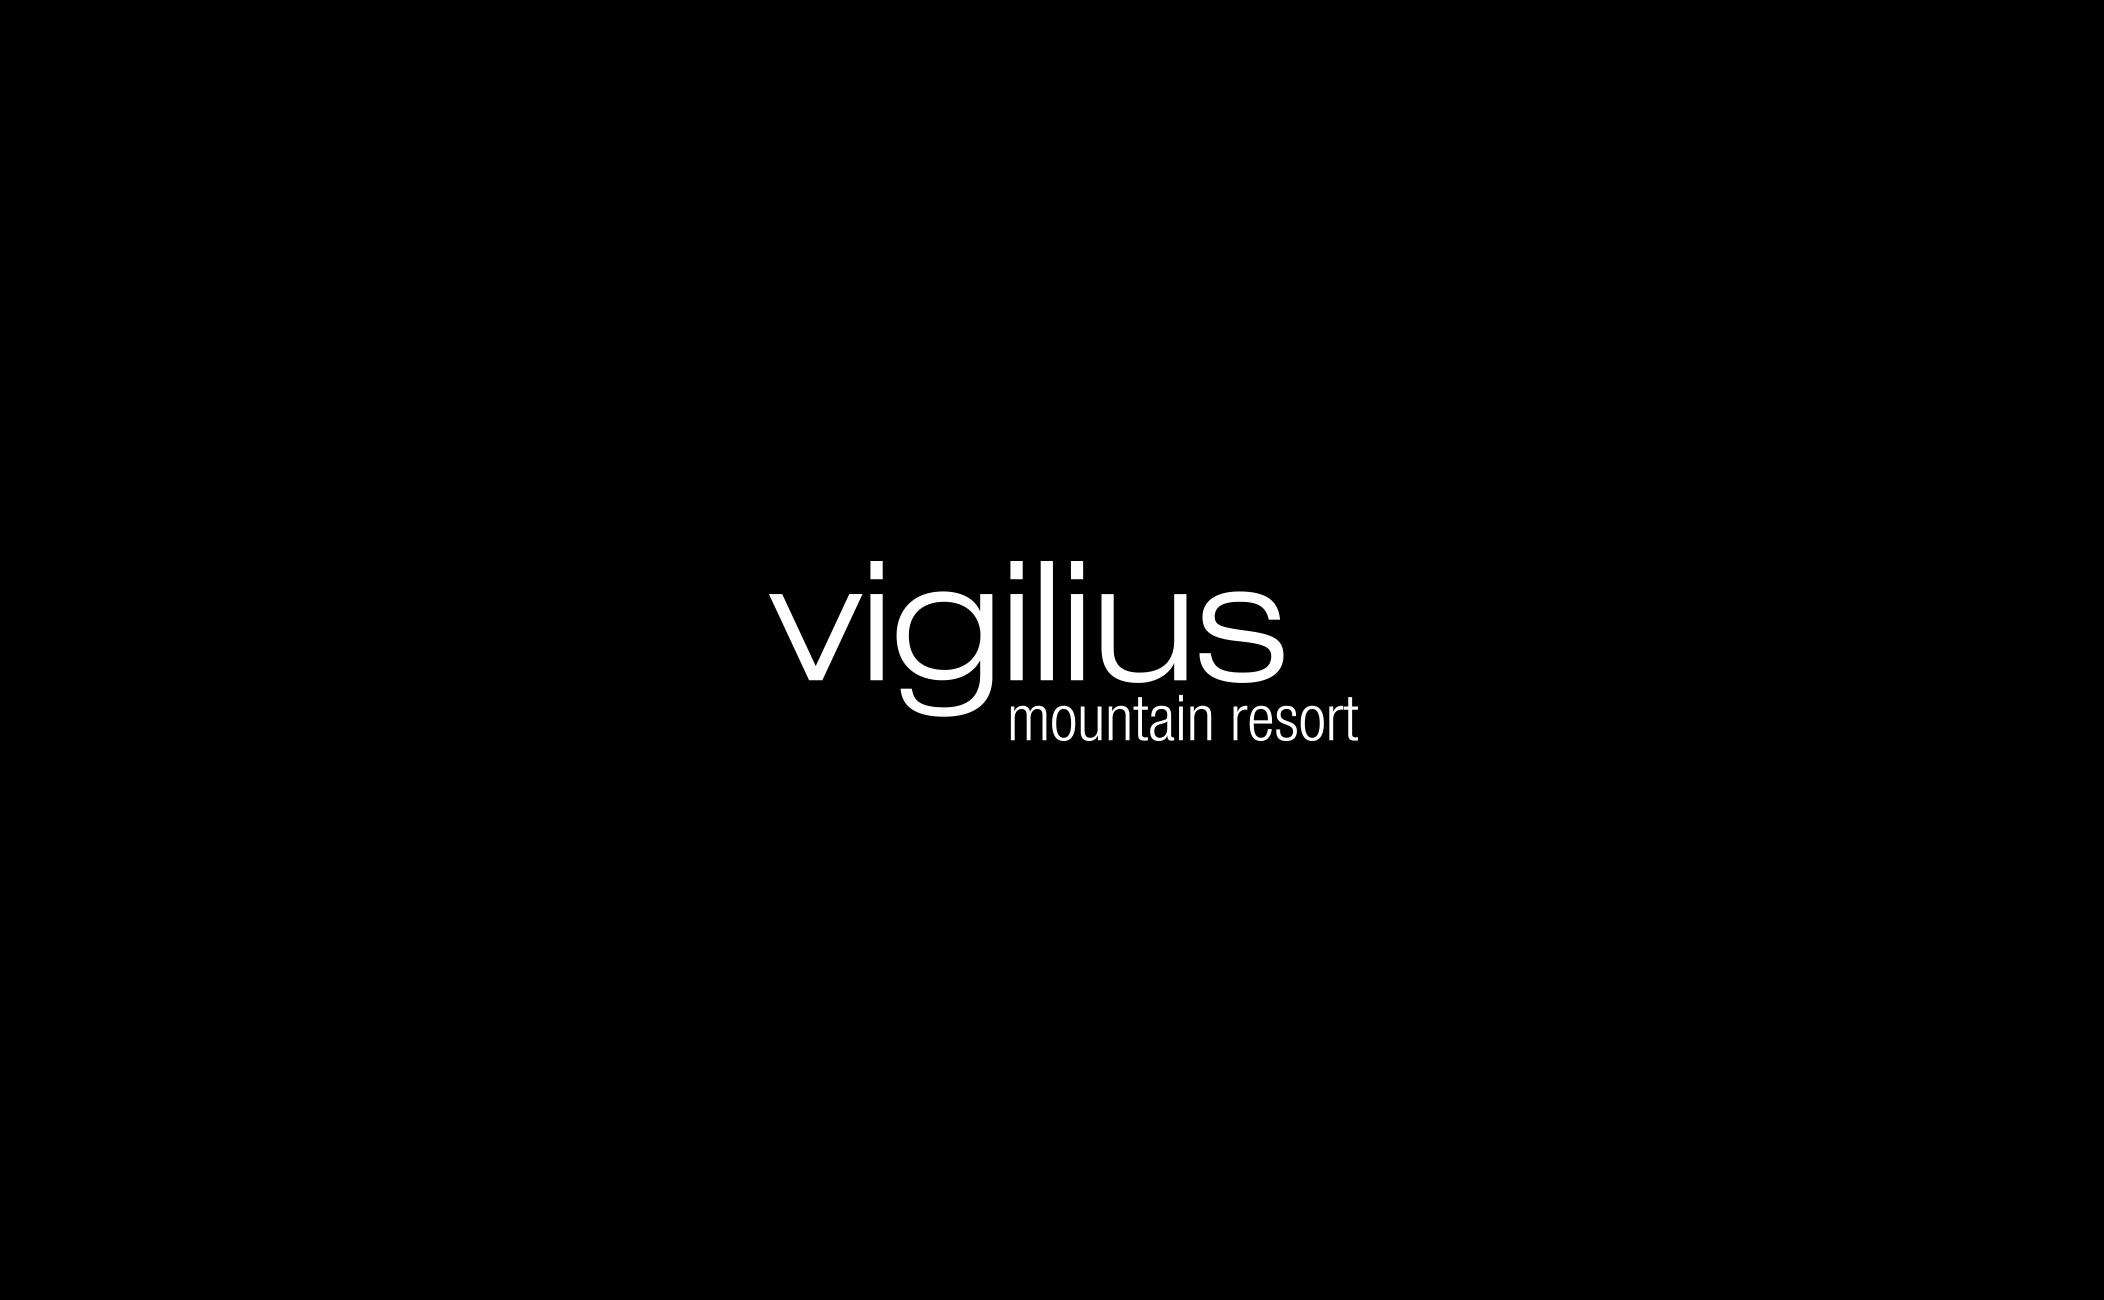 KD_LOGOS_2020_Vigilius